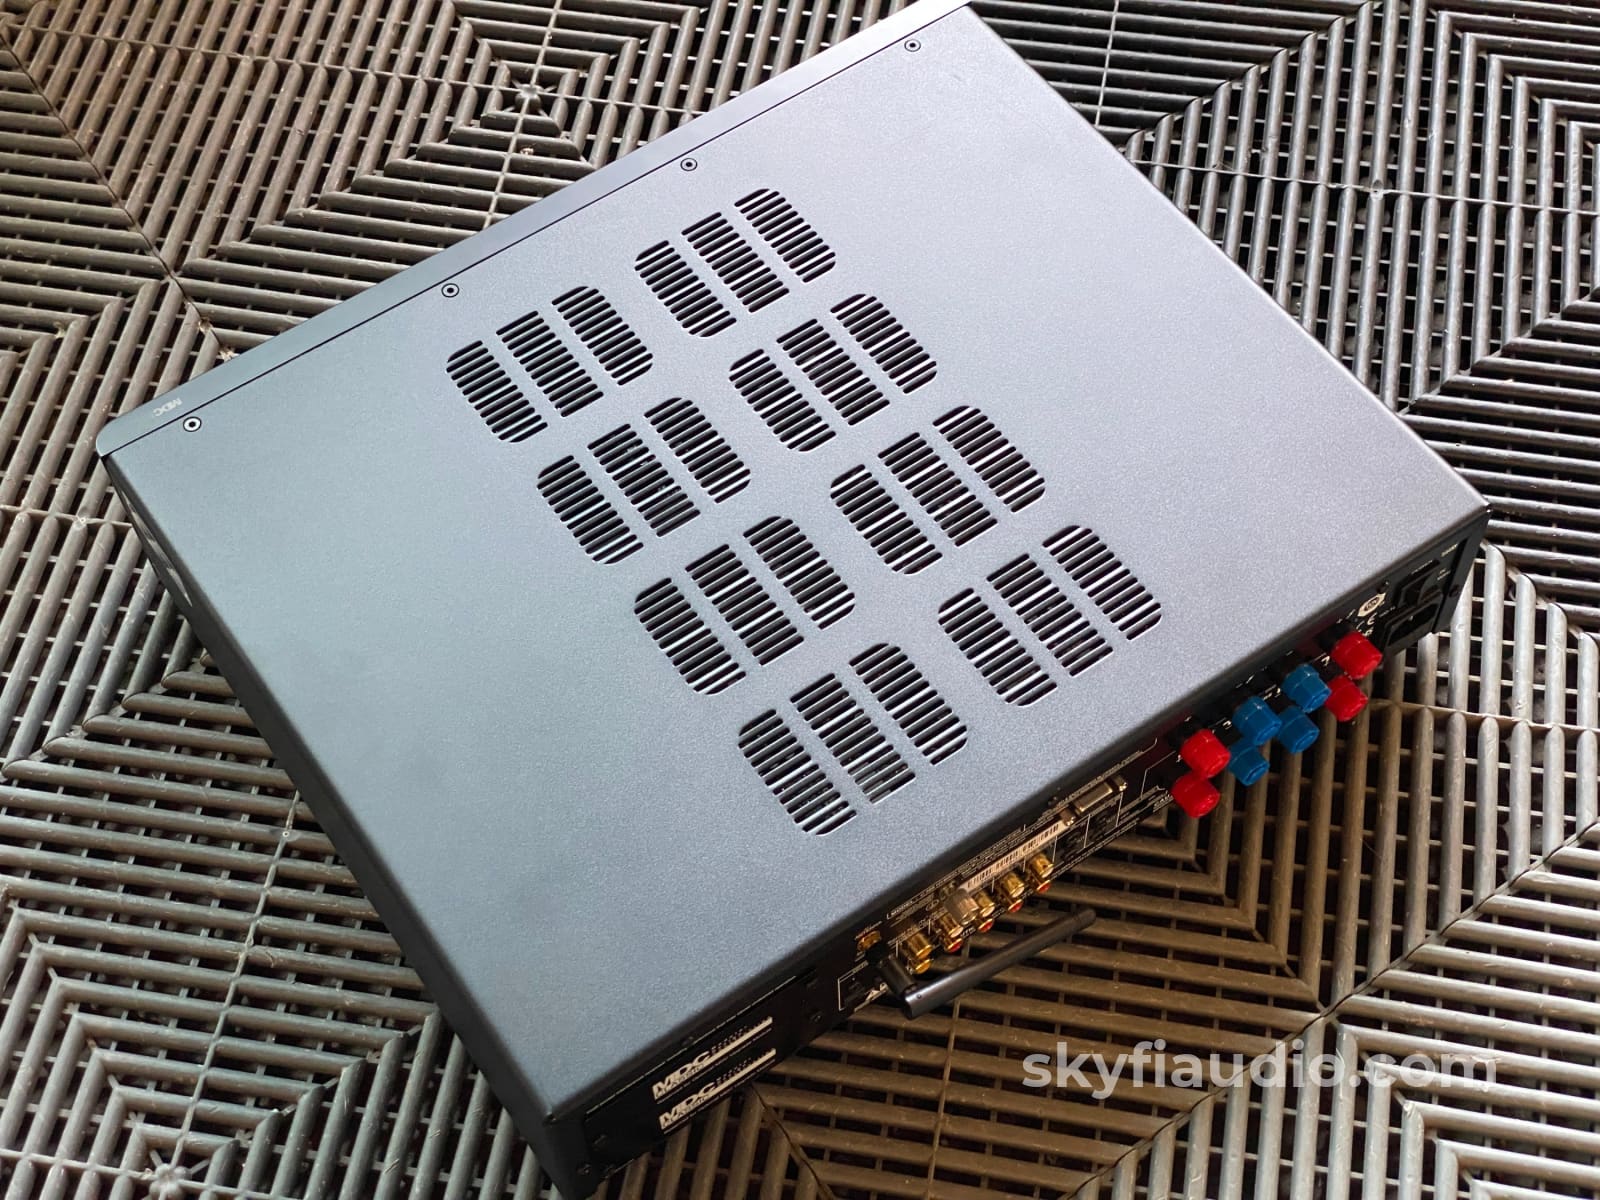 Nad C368 Hybrid Digital Dac Amplifier - New Open Box Integrated